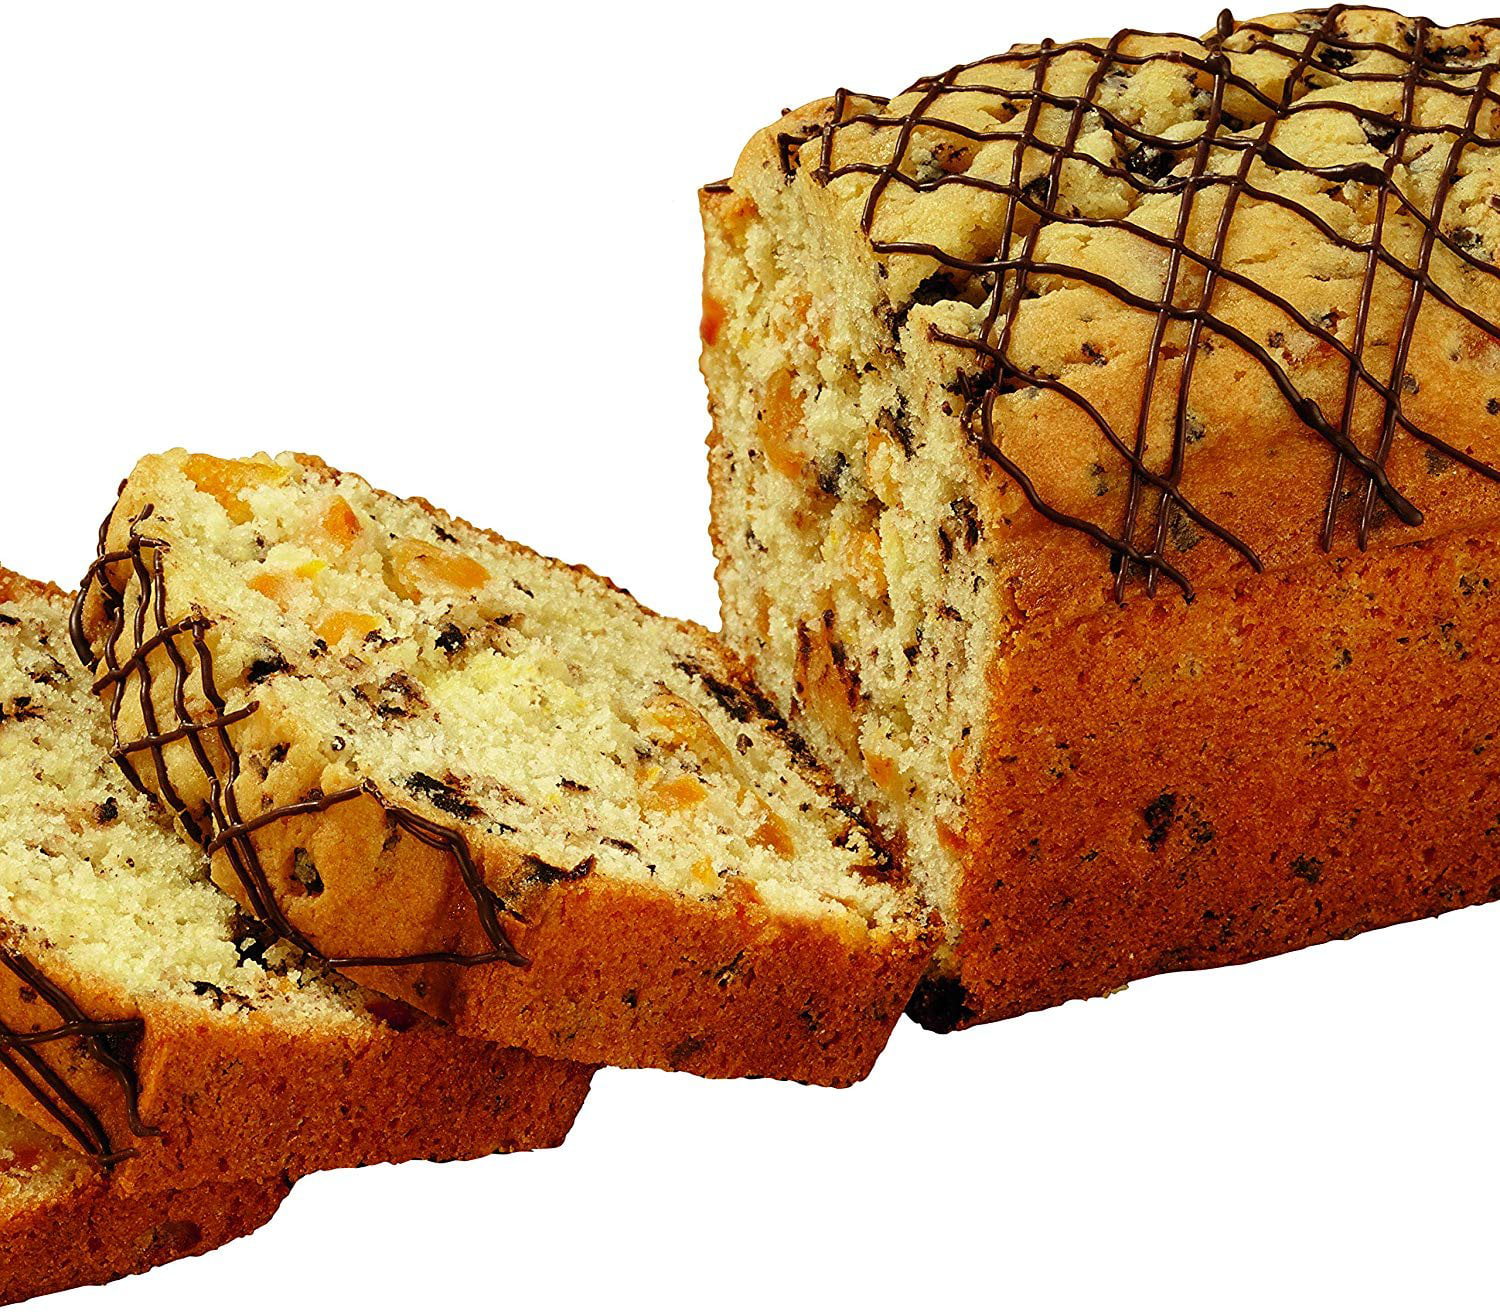 Wilton 2105-949 Recipe Right Non-Stick Bakeware Mini Loaf Pan - 5.75 x 3 | 624633